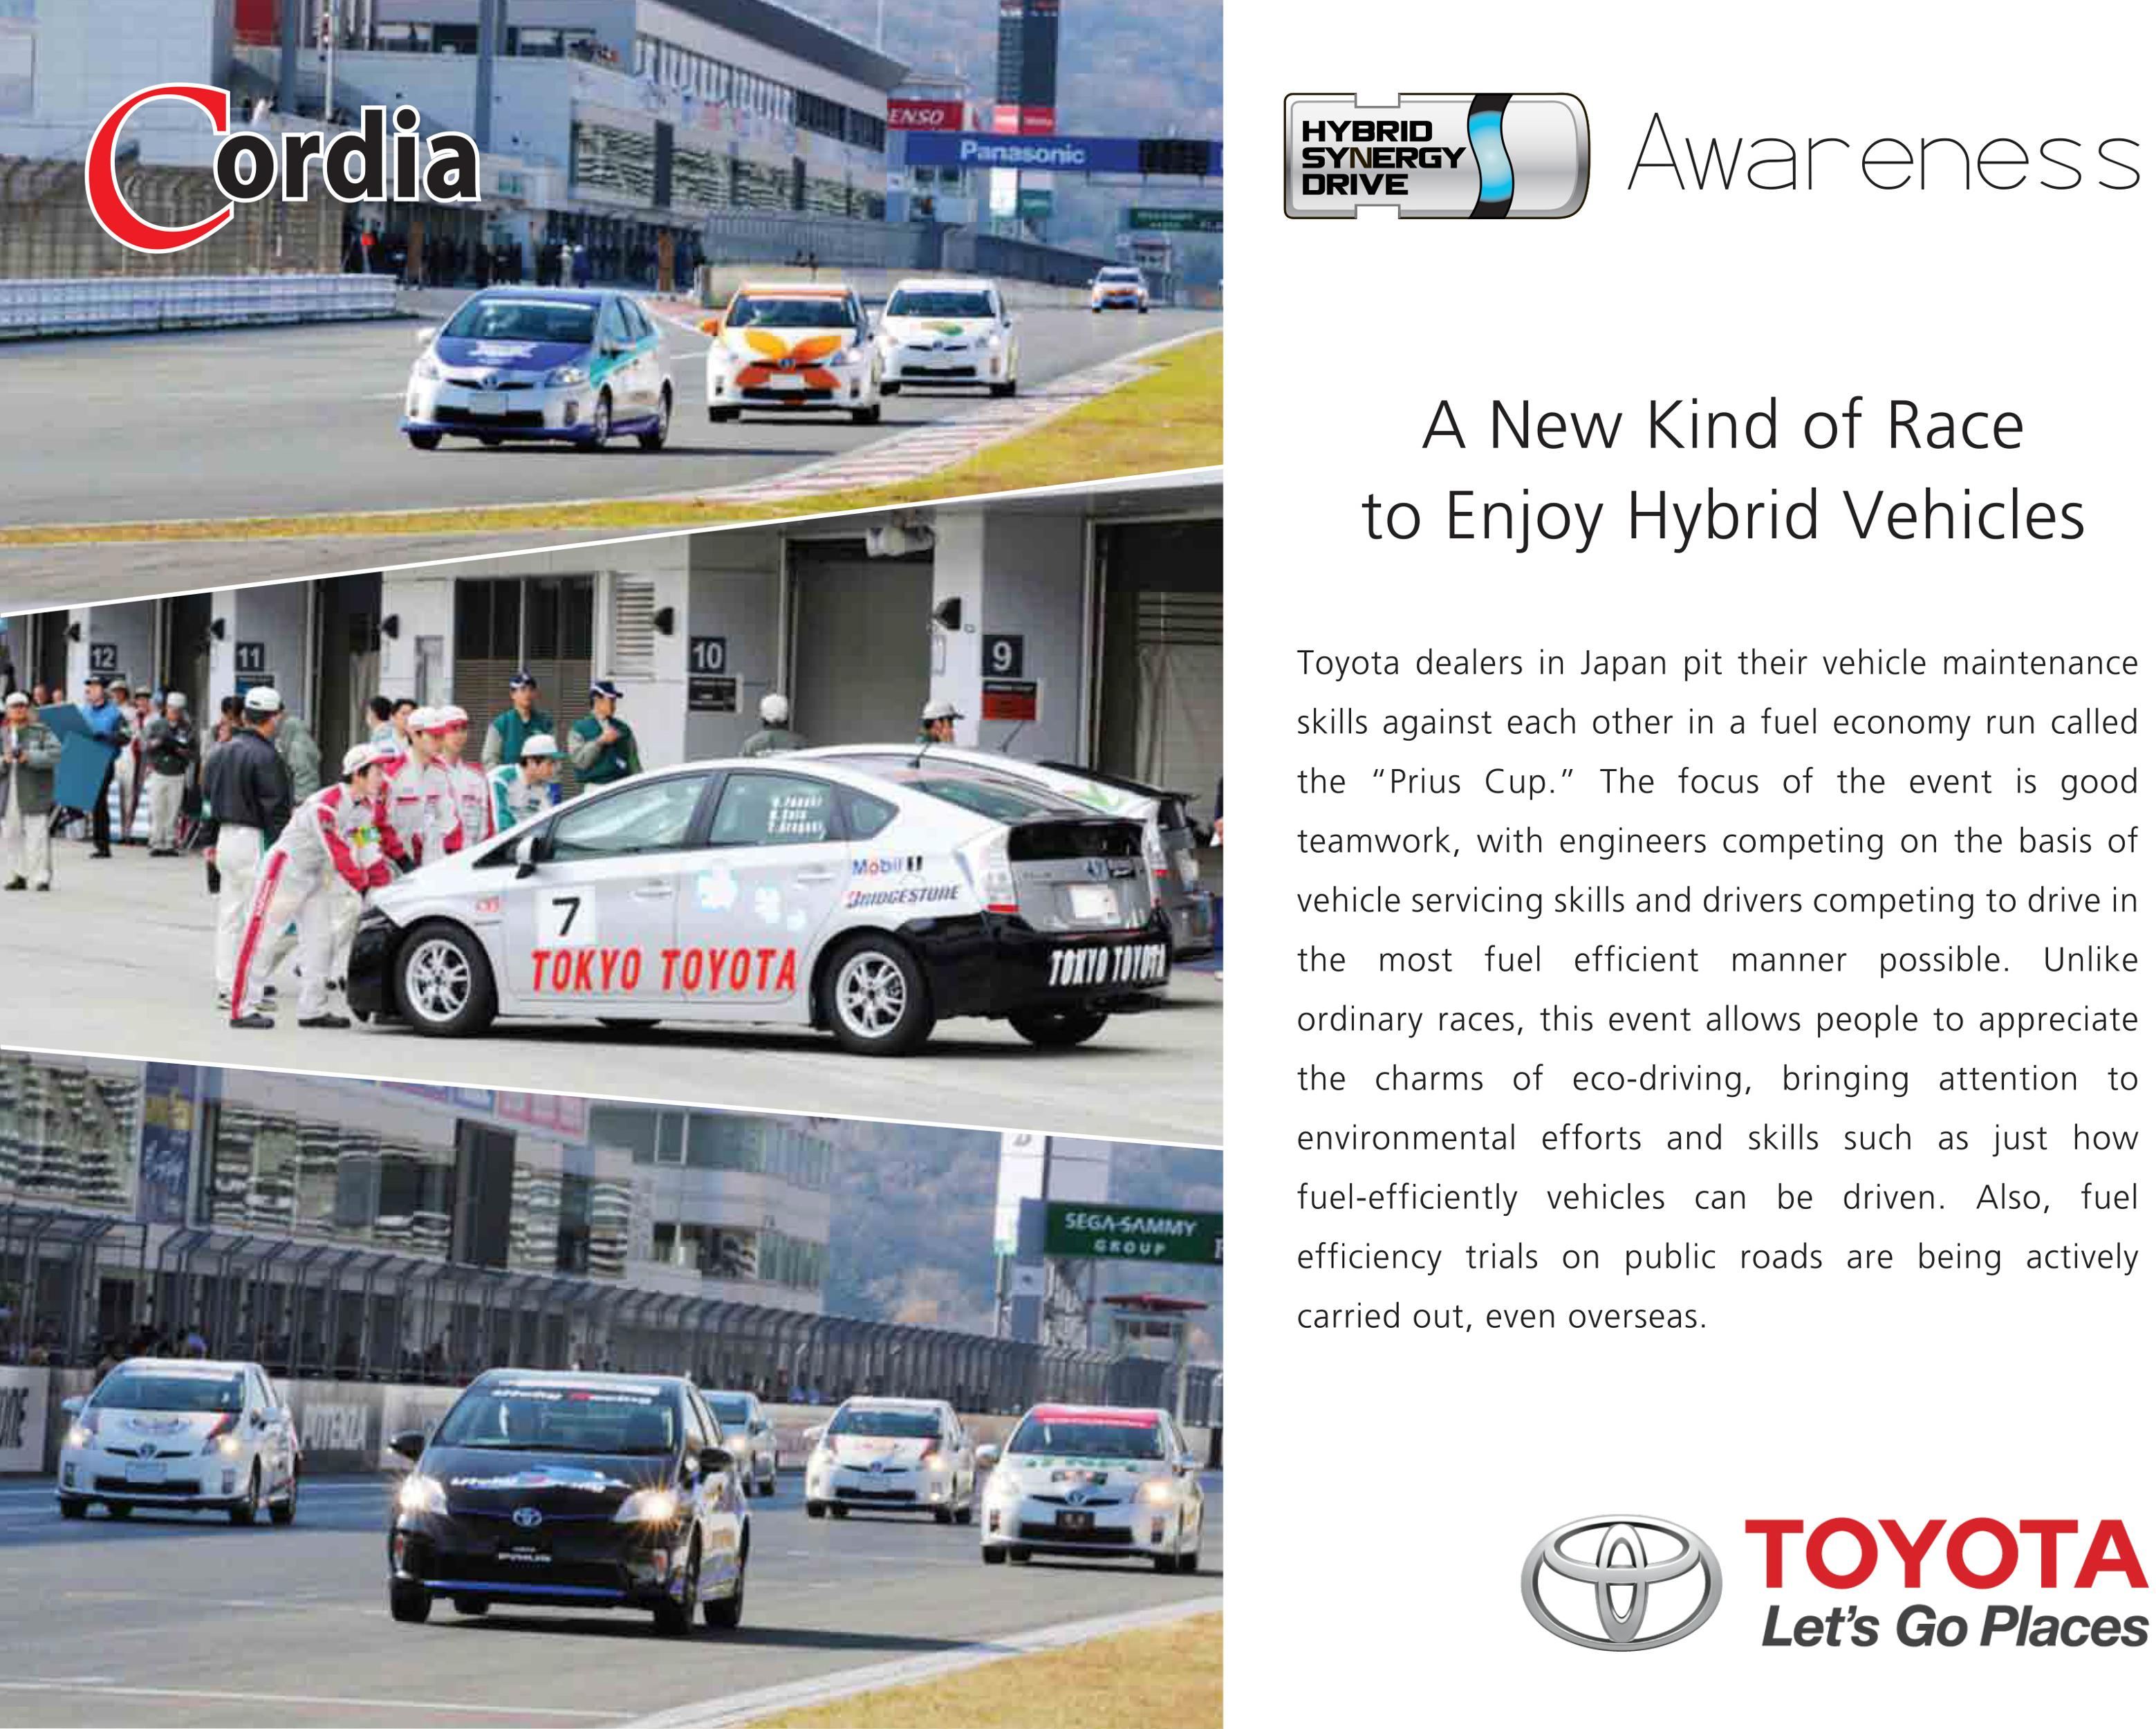 A New Kind of Race to Enjoy Hybrid Vehicles - Hybrid Awareness